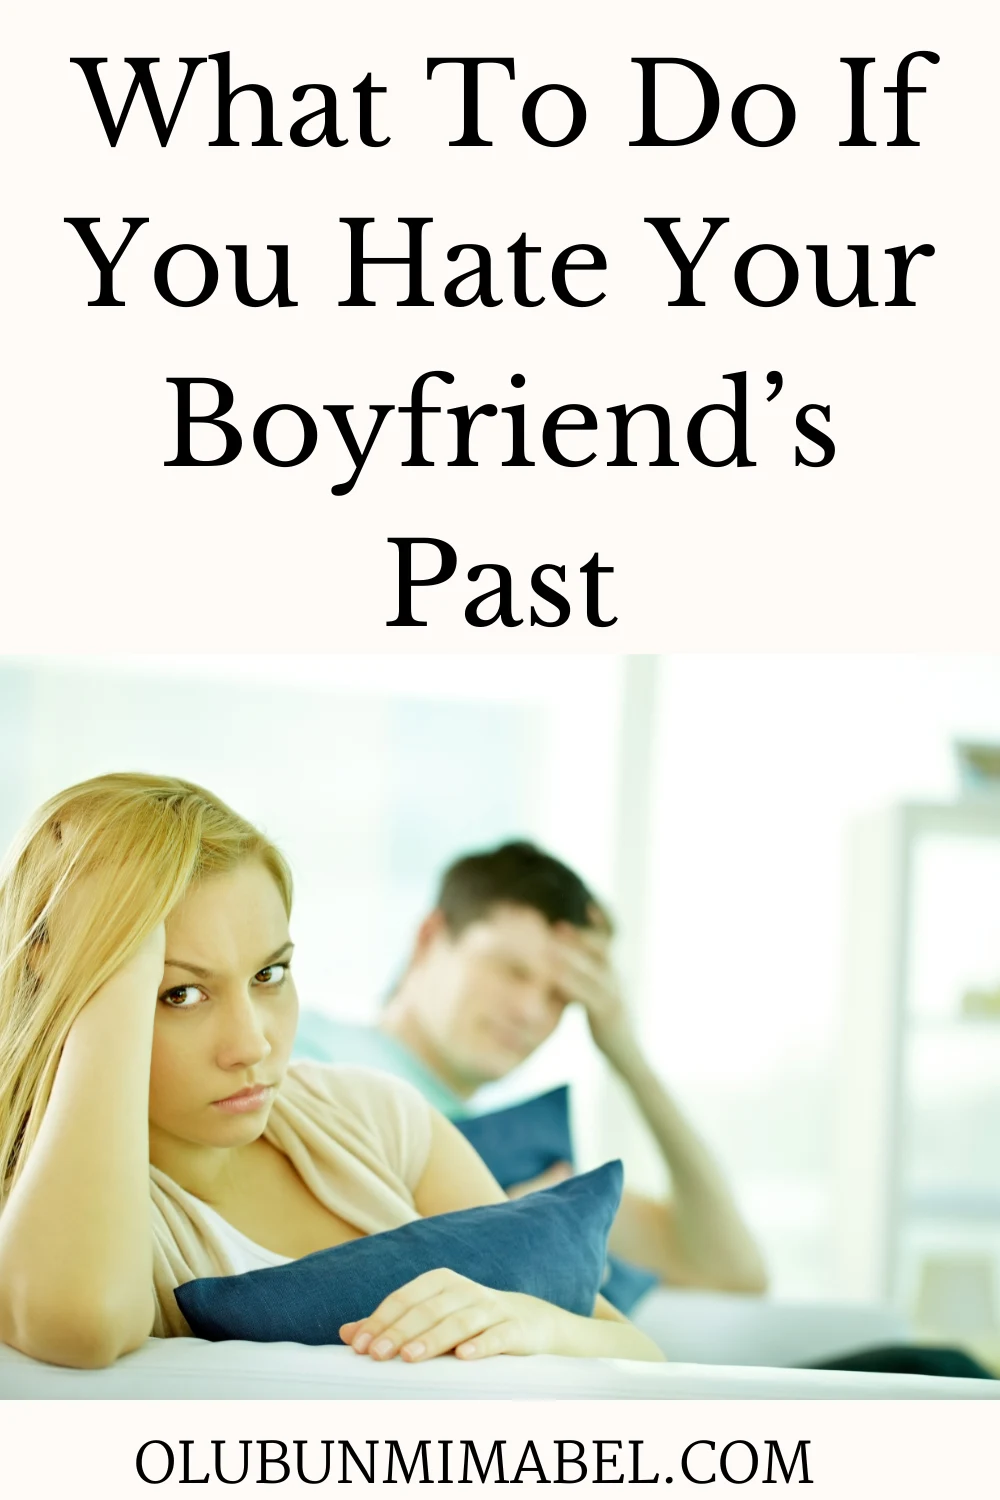 I Hate My Boyfriend's Past